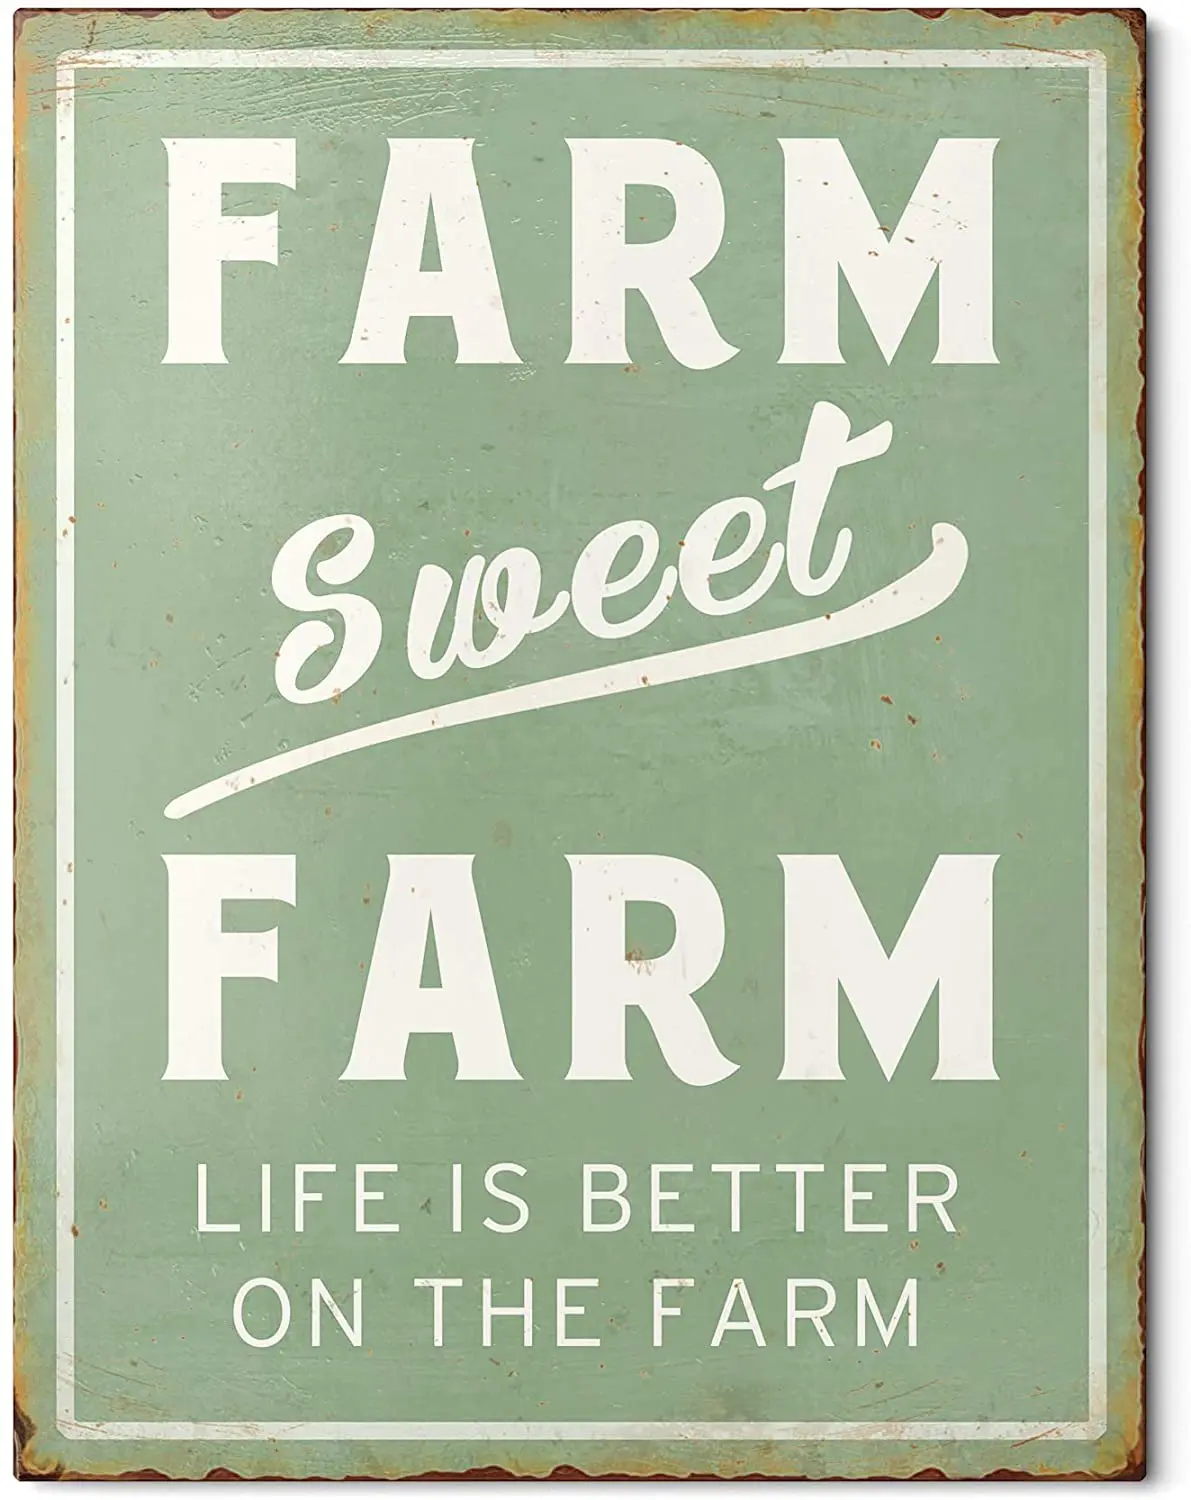 

New Barnyard Designs 'Farm Sweet Farm Life Is Better On The Farm' Retro Vintage Metal Tin Bar Sign, Decorative Wall Art Signage,